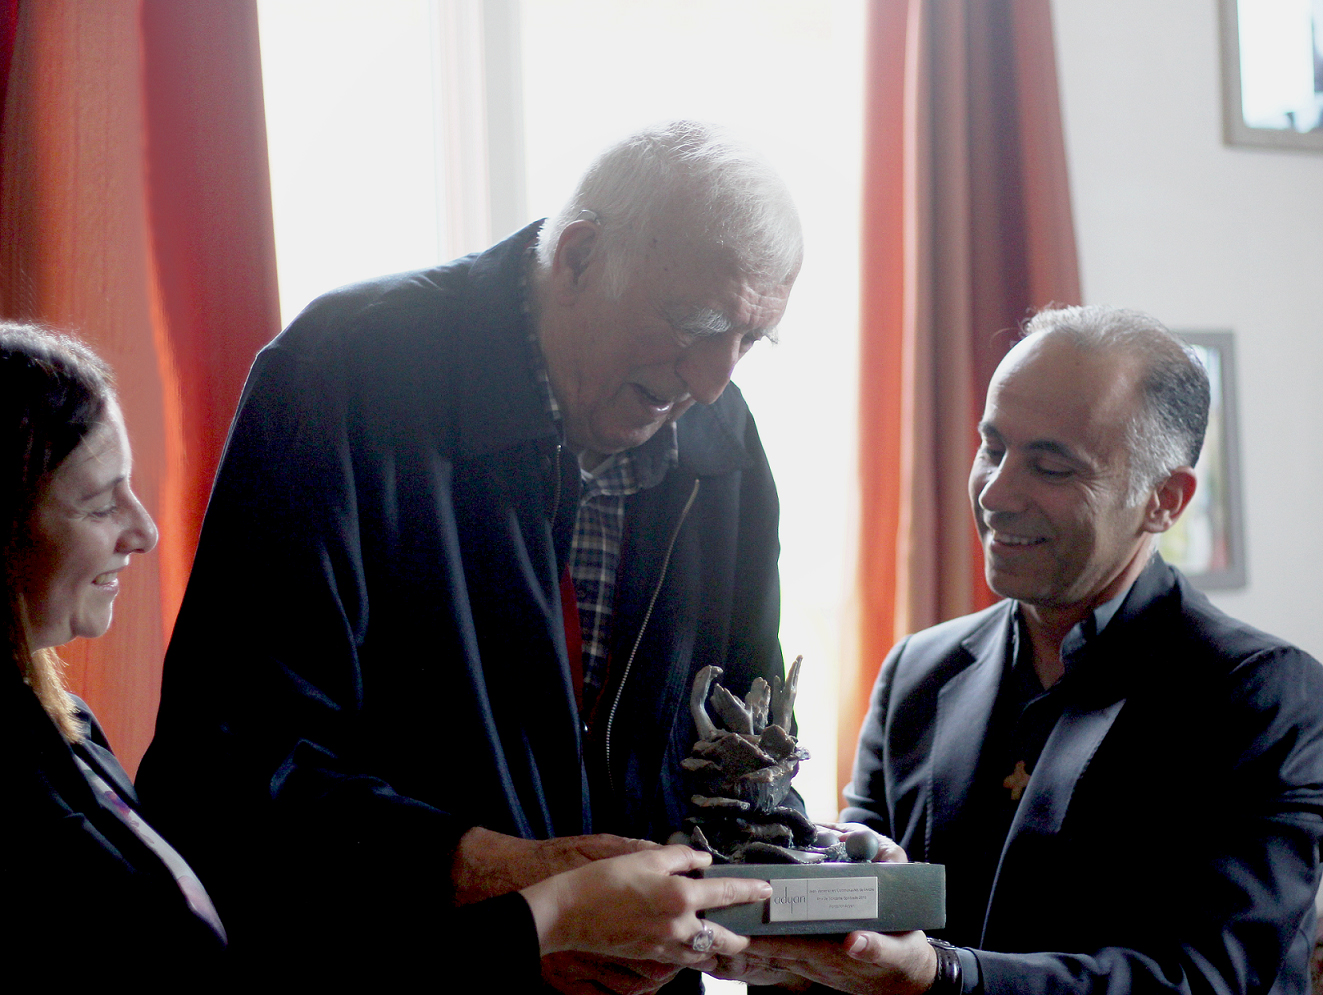 L'Arche founder Jean Vanier receives spiritual solidarity award